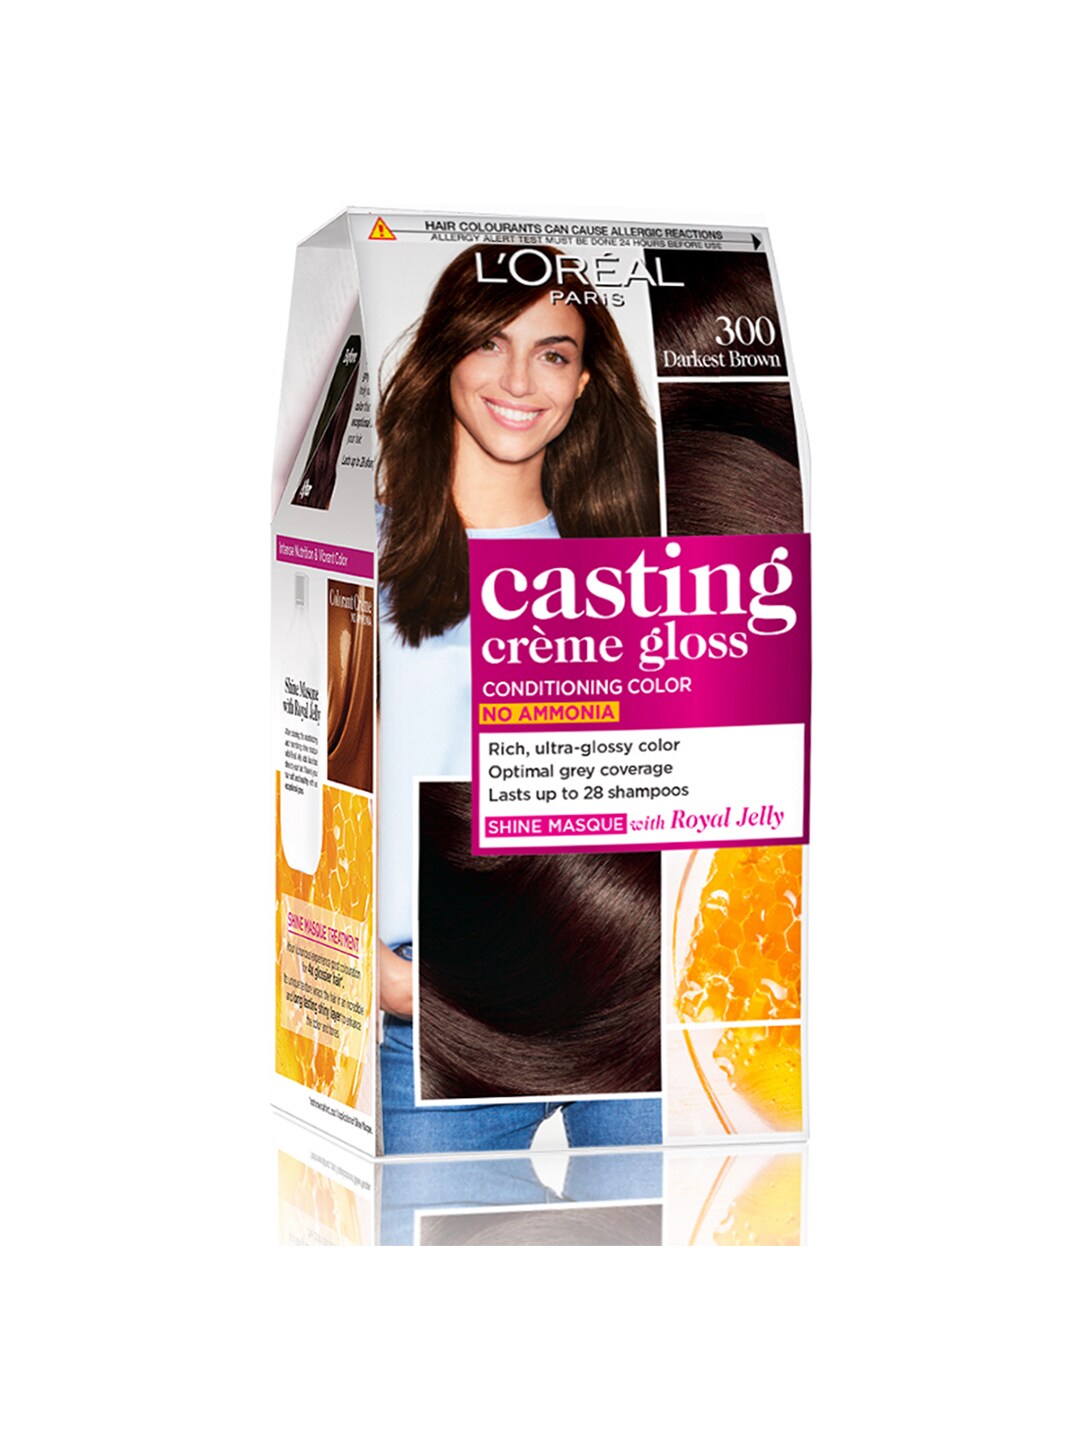 LOreal Paris Casting Creme Gloss Hair Color - Darkest Brown 300 (87.5 g + 72 ml) Price in India